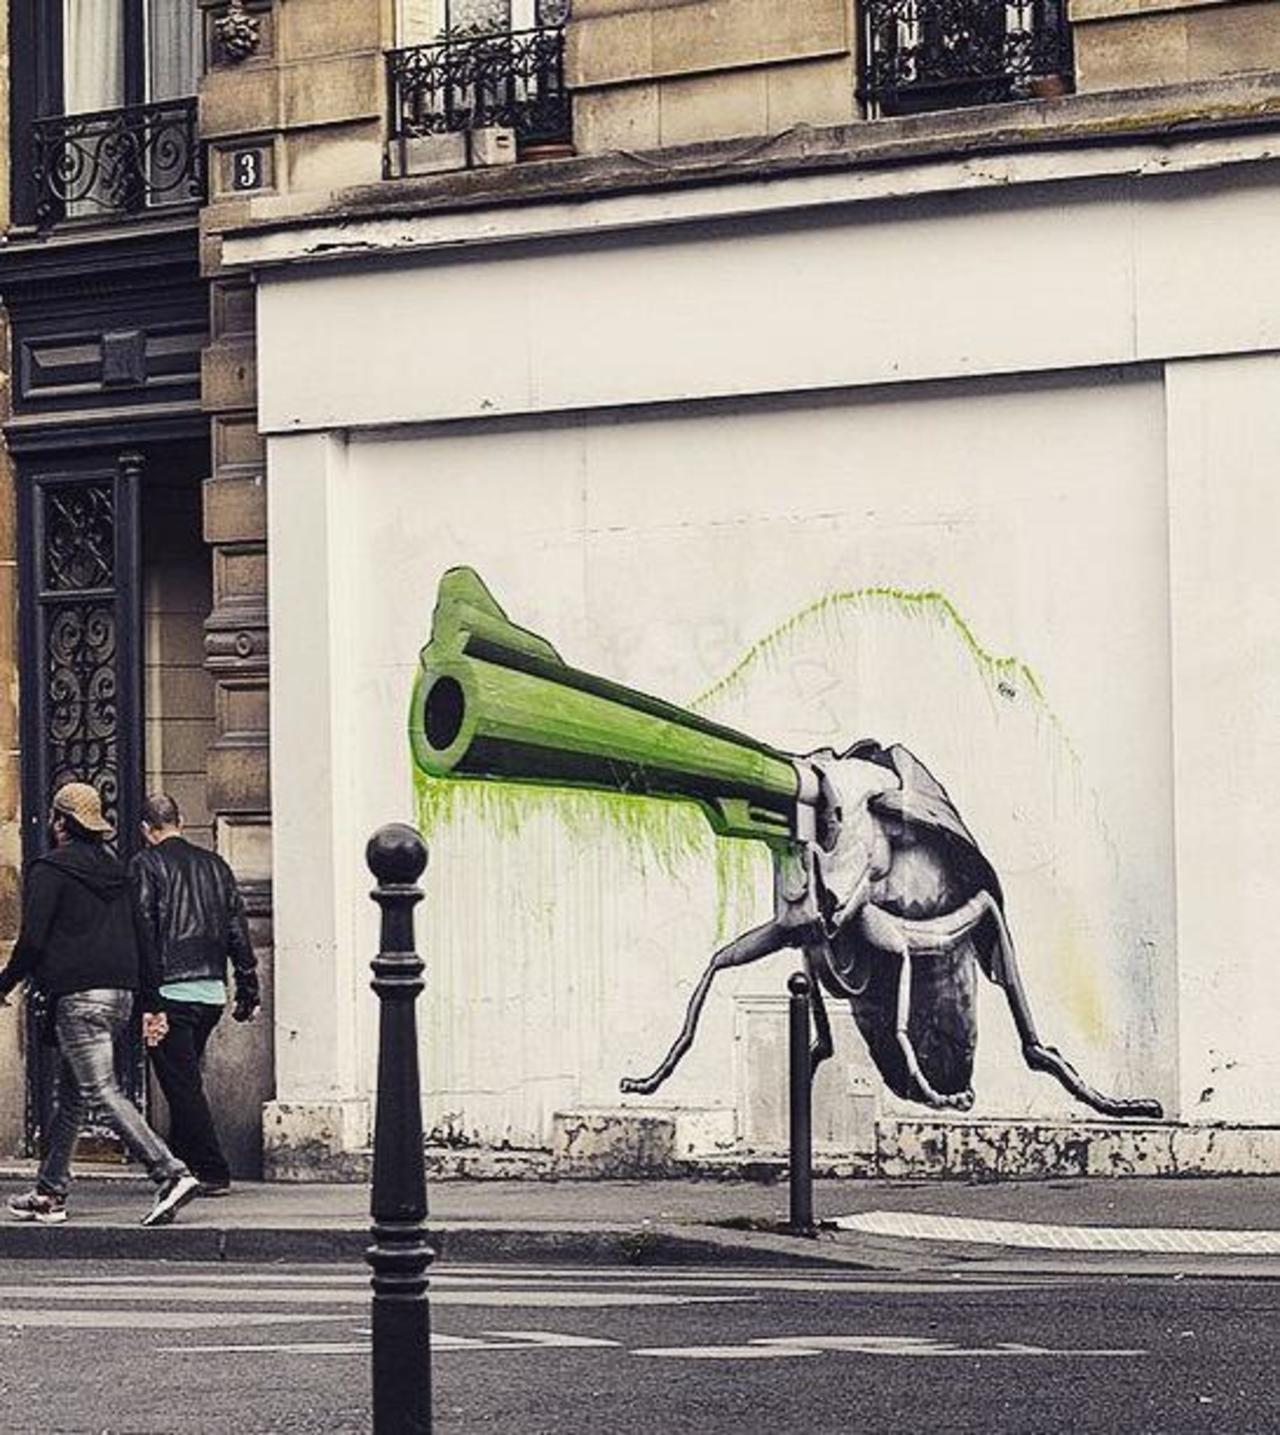 Technology merges with nature.
Street Art by Ludo in Paris 

#art #arte #graffiti #streetart http://t.co/ogLyrBNcey